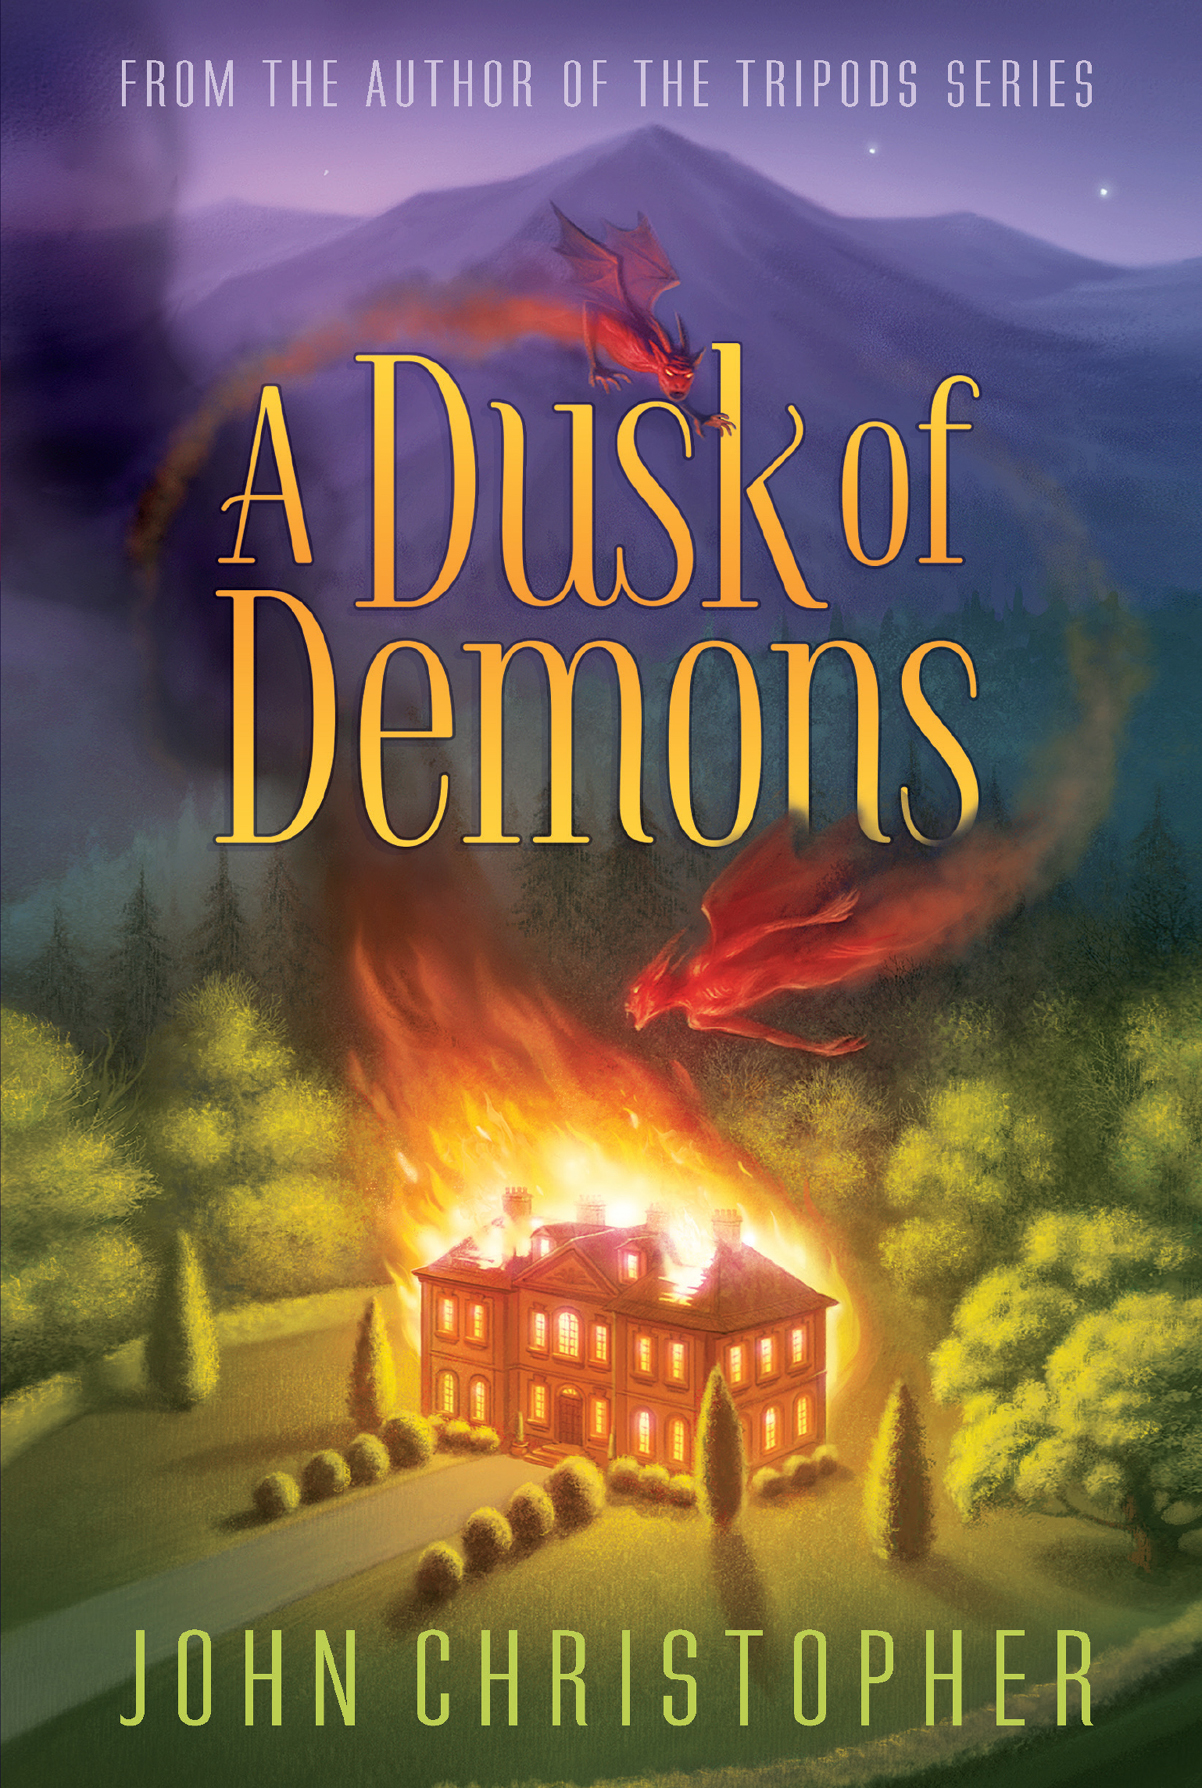 A Dusk of Demons by John Christopher